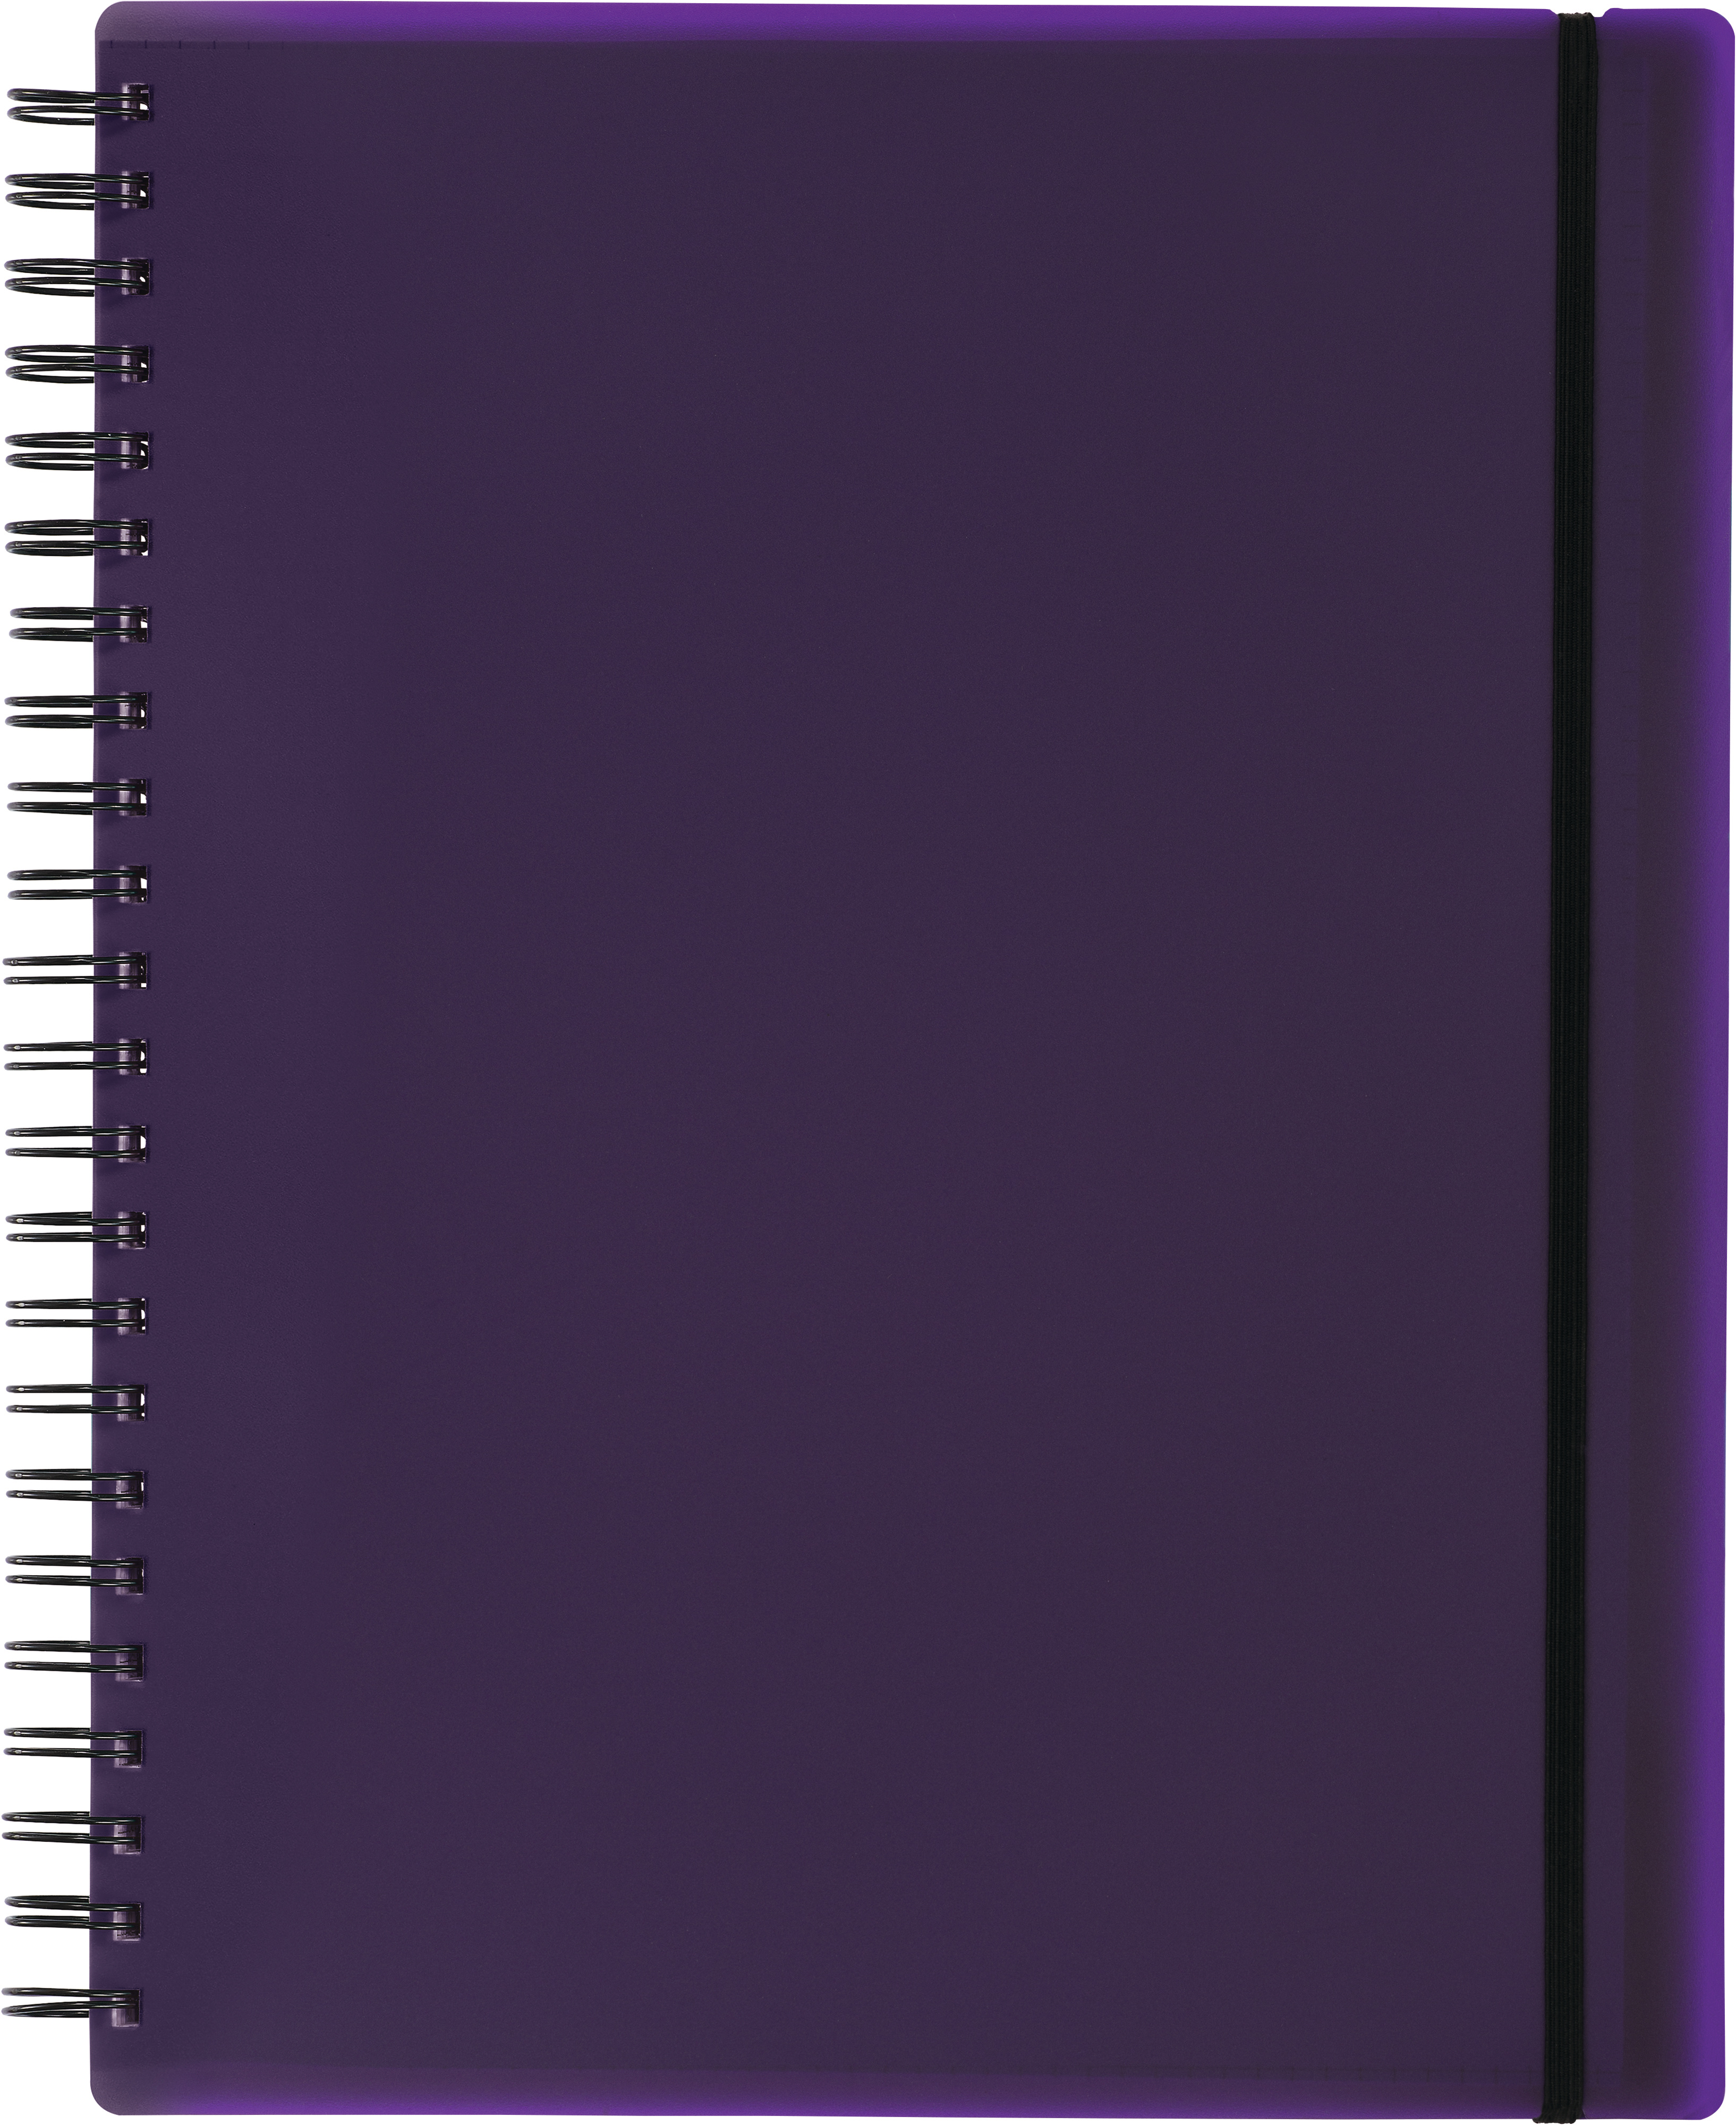 KOLMA Carnet Easy A4 06.550.13 violet